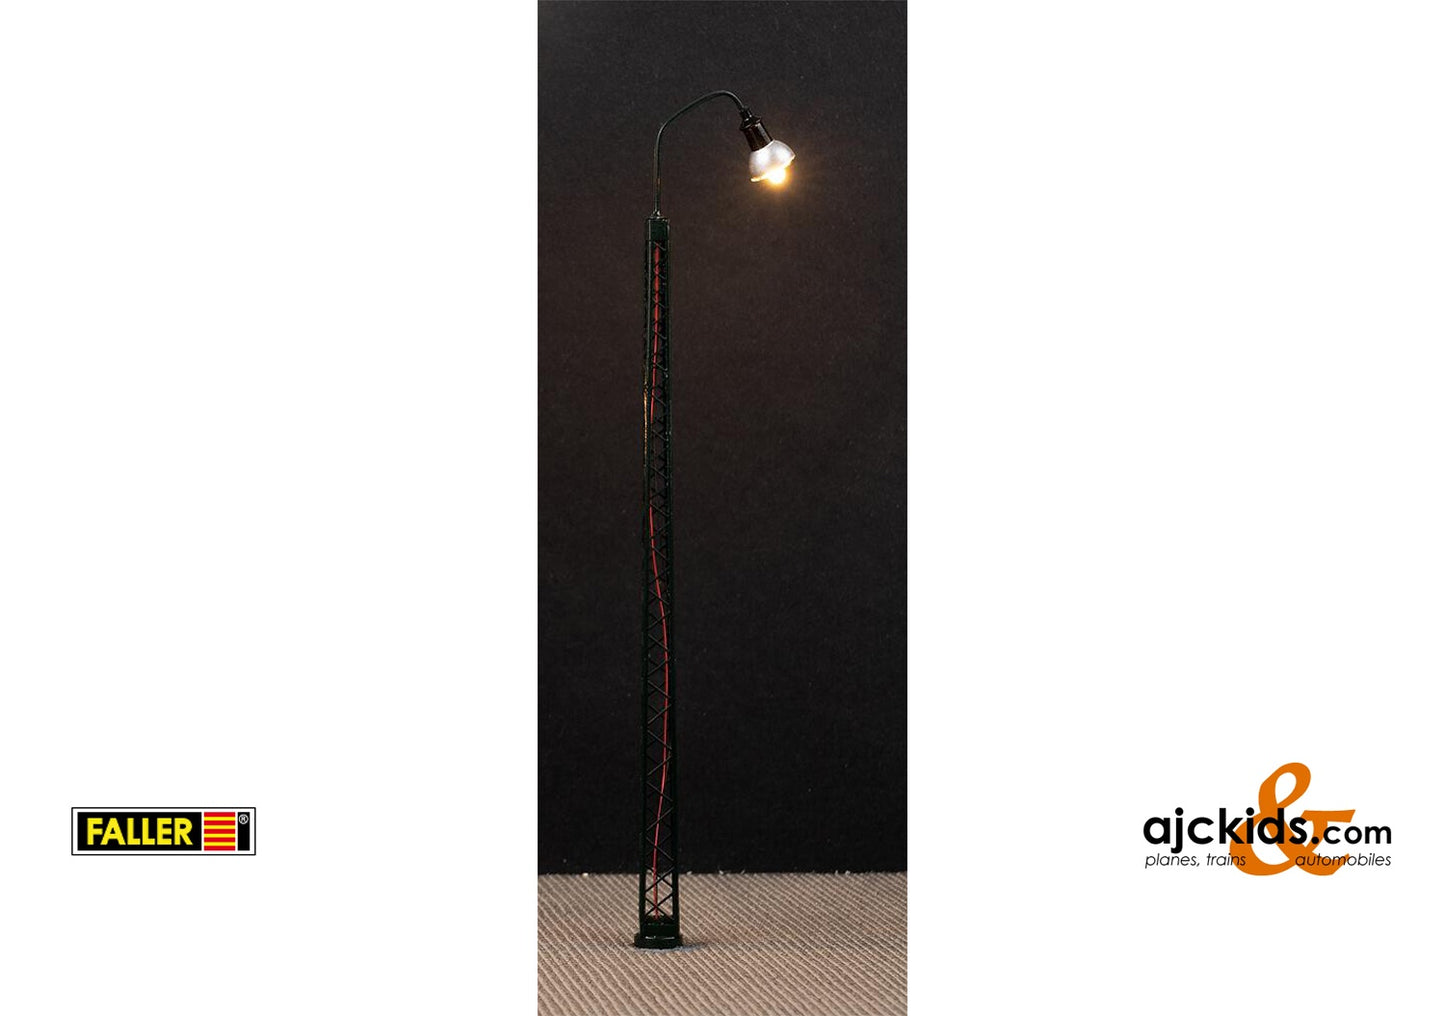 Faller 180209 - LED Lattice mast arc luminaire